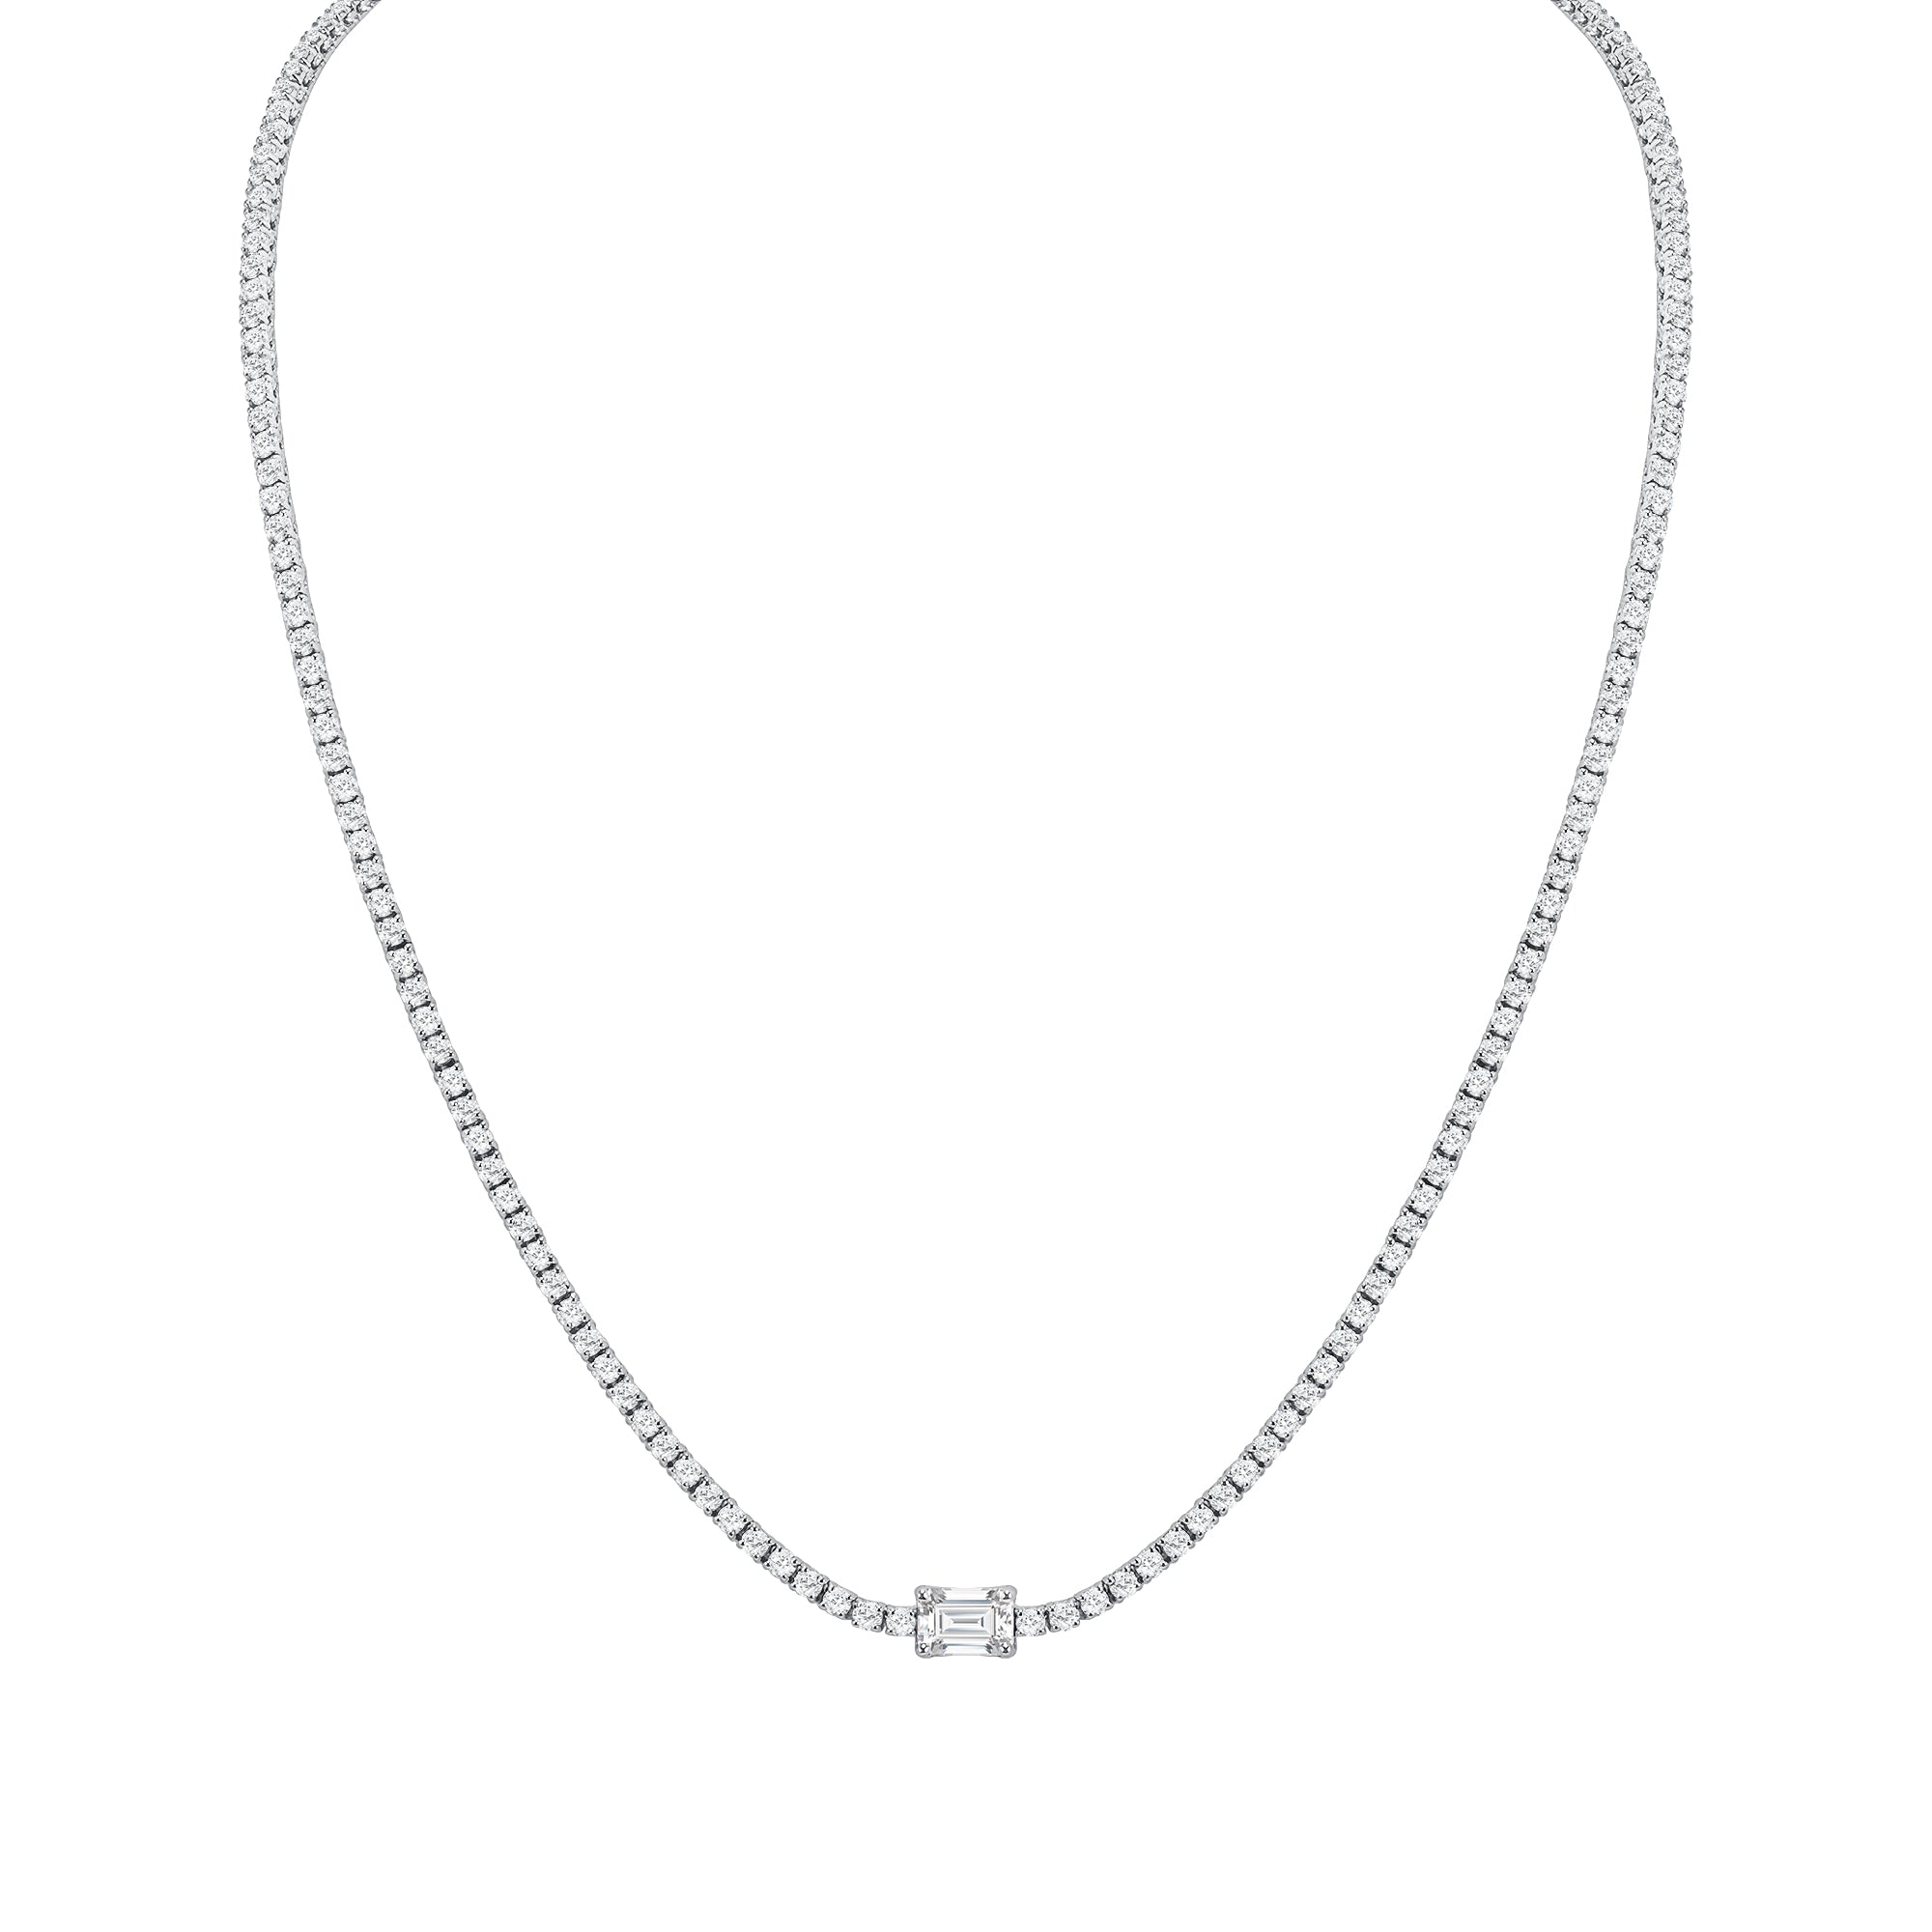 4.97ct. Emerald Cut Center Stone Diamond Tennis Necklace in 18k White Gold